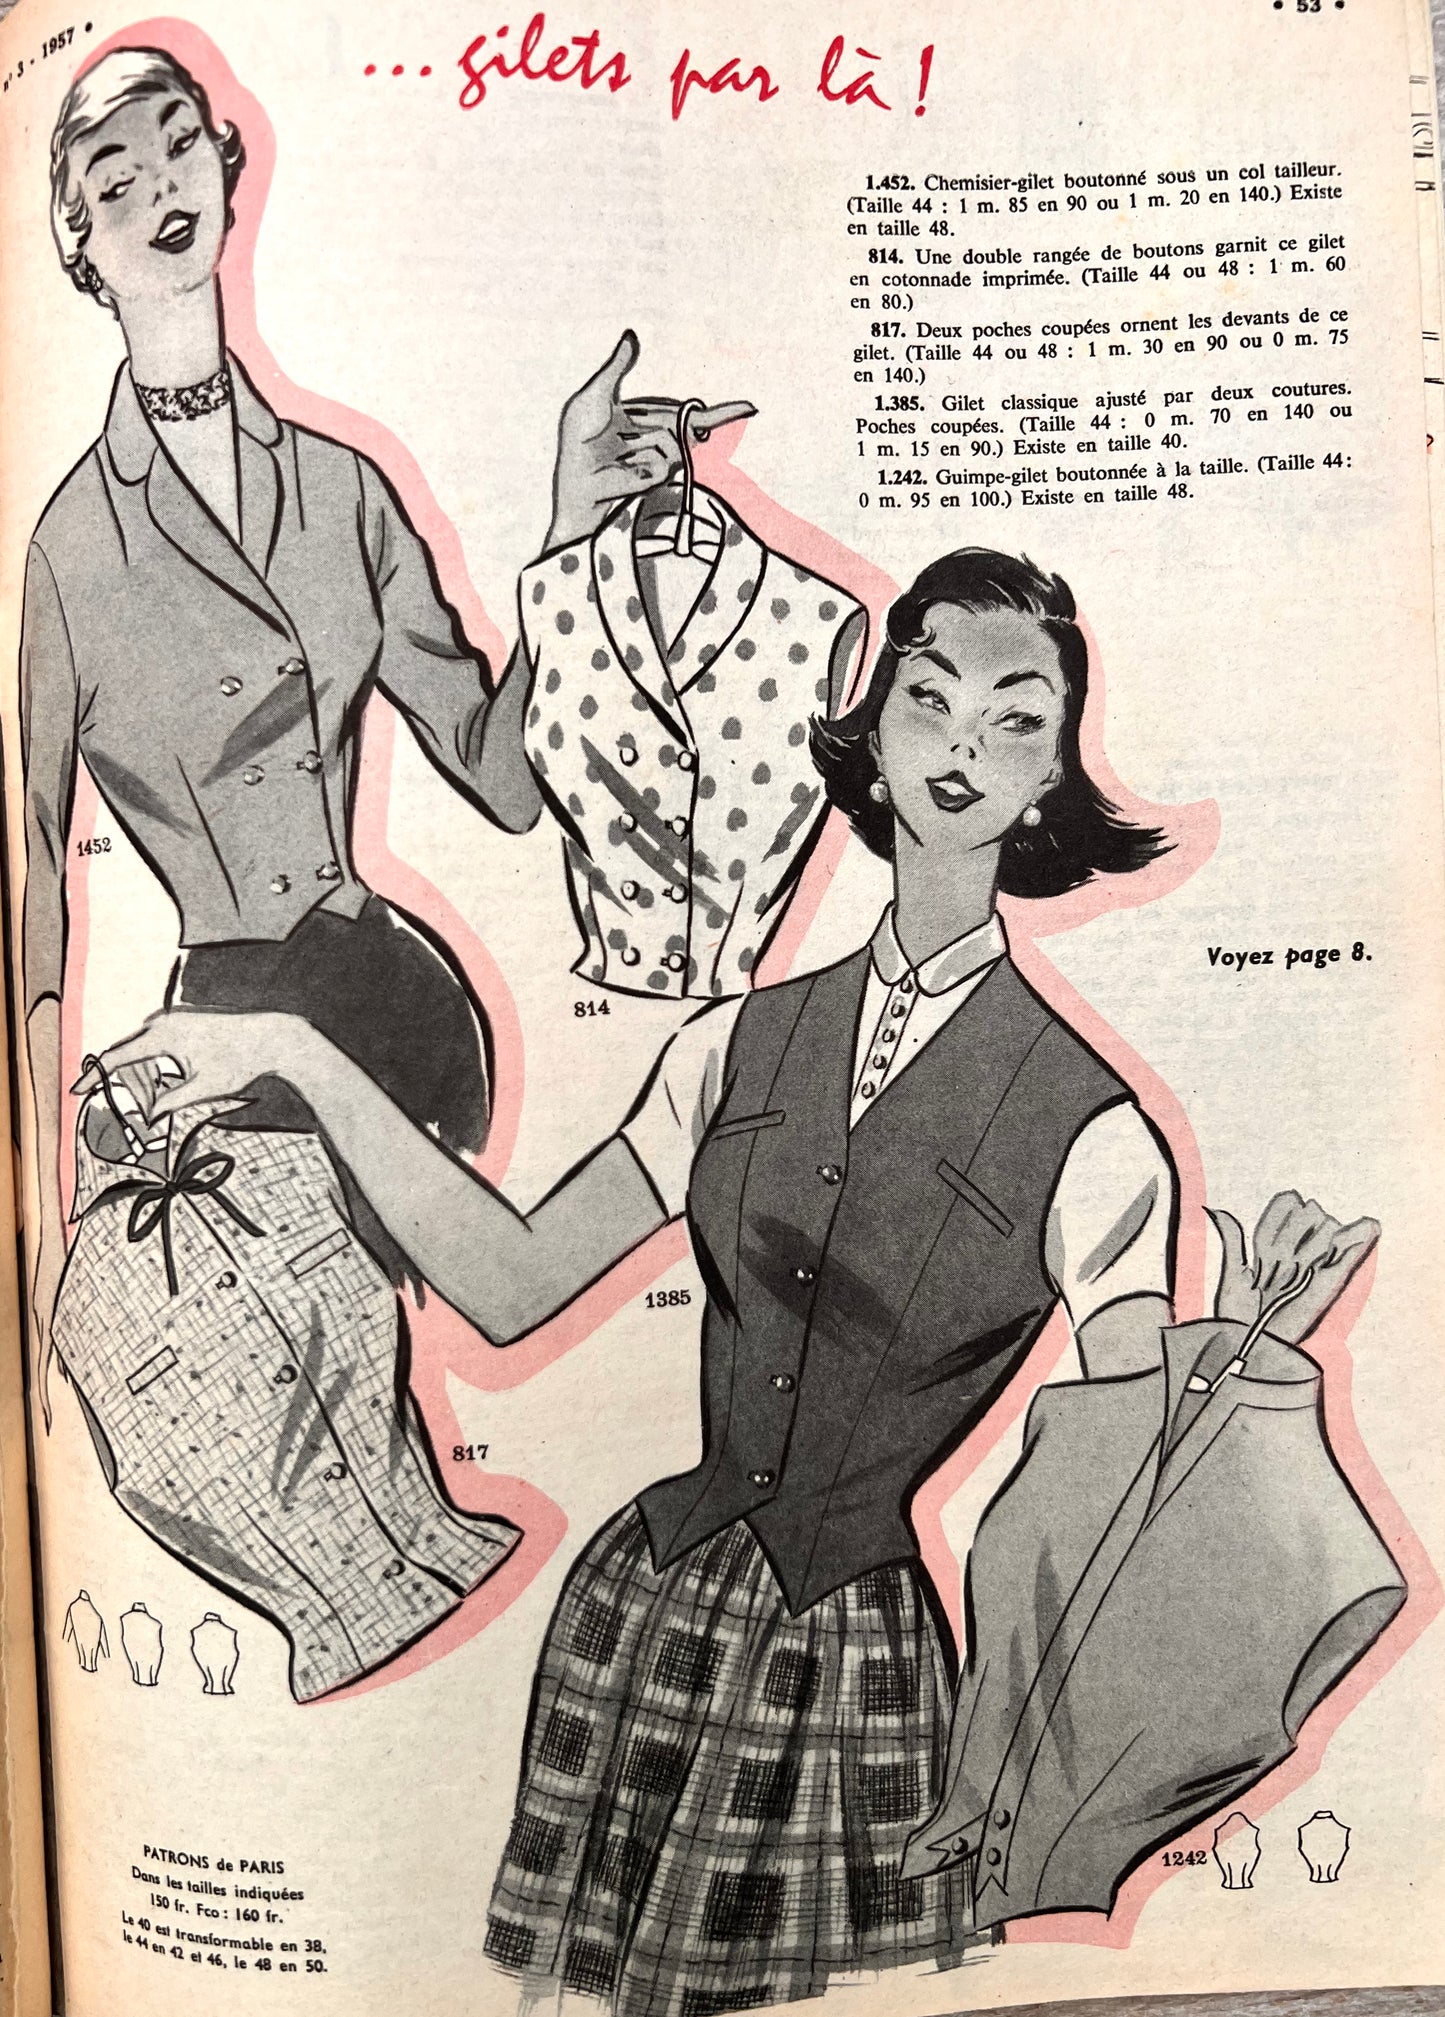 January 1957 Fashions in French Women's Magazine Le Petit Echo de la Mode